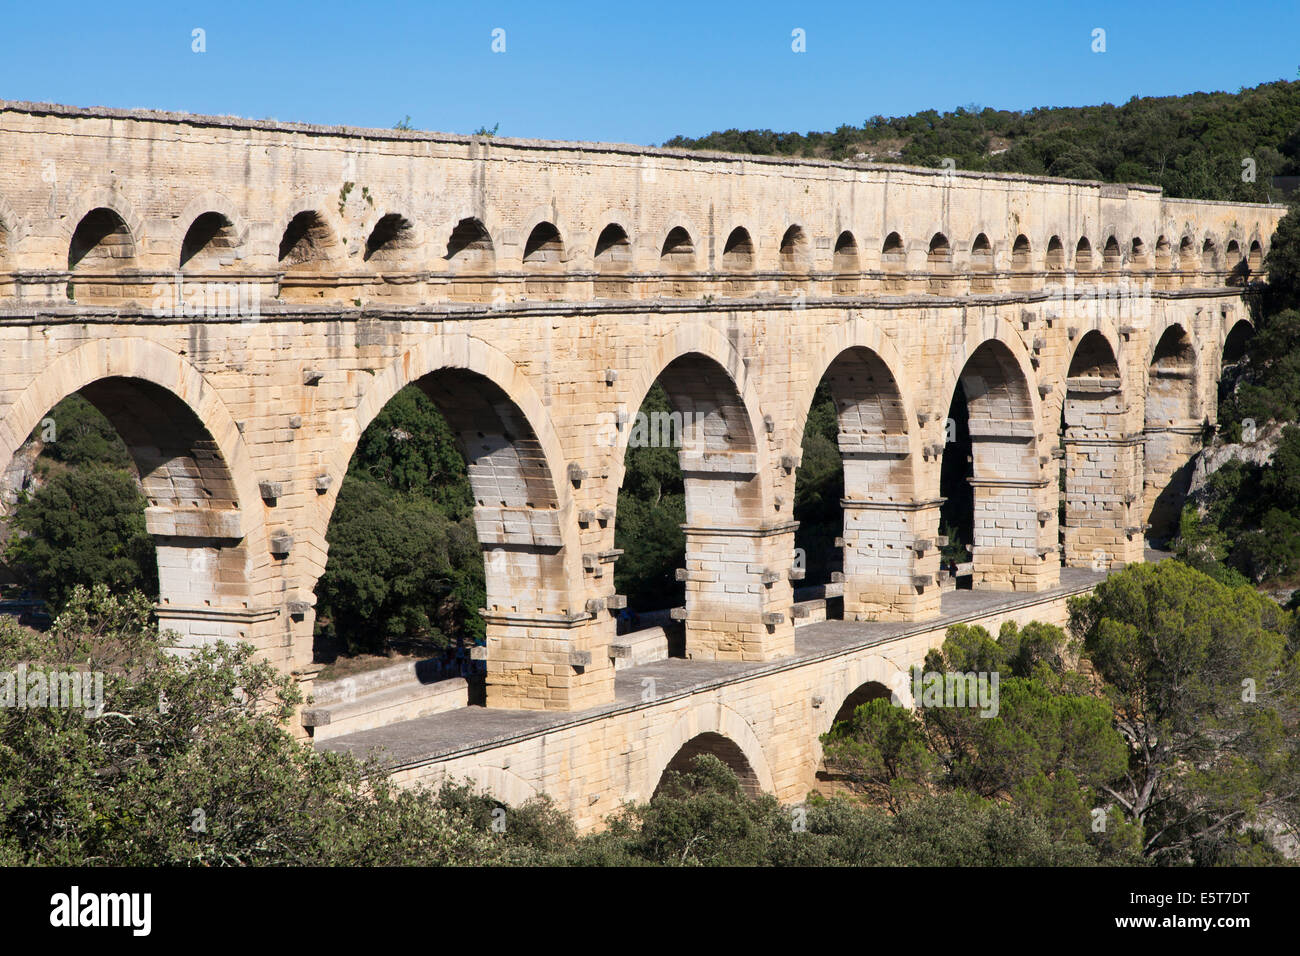 Ancient Roman aqueduct of Nimes, Pont du Gard, France. Stock Photo